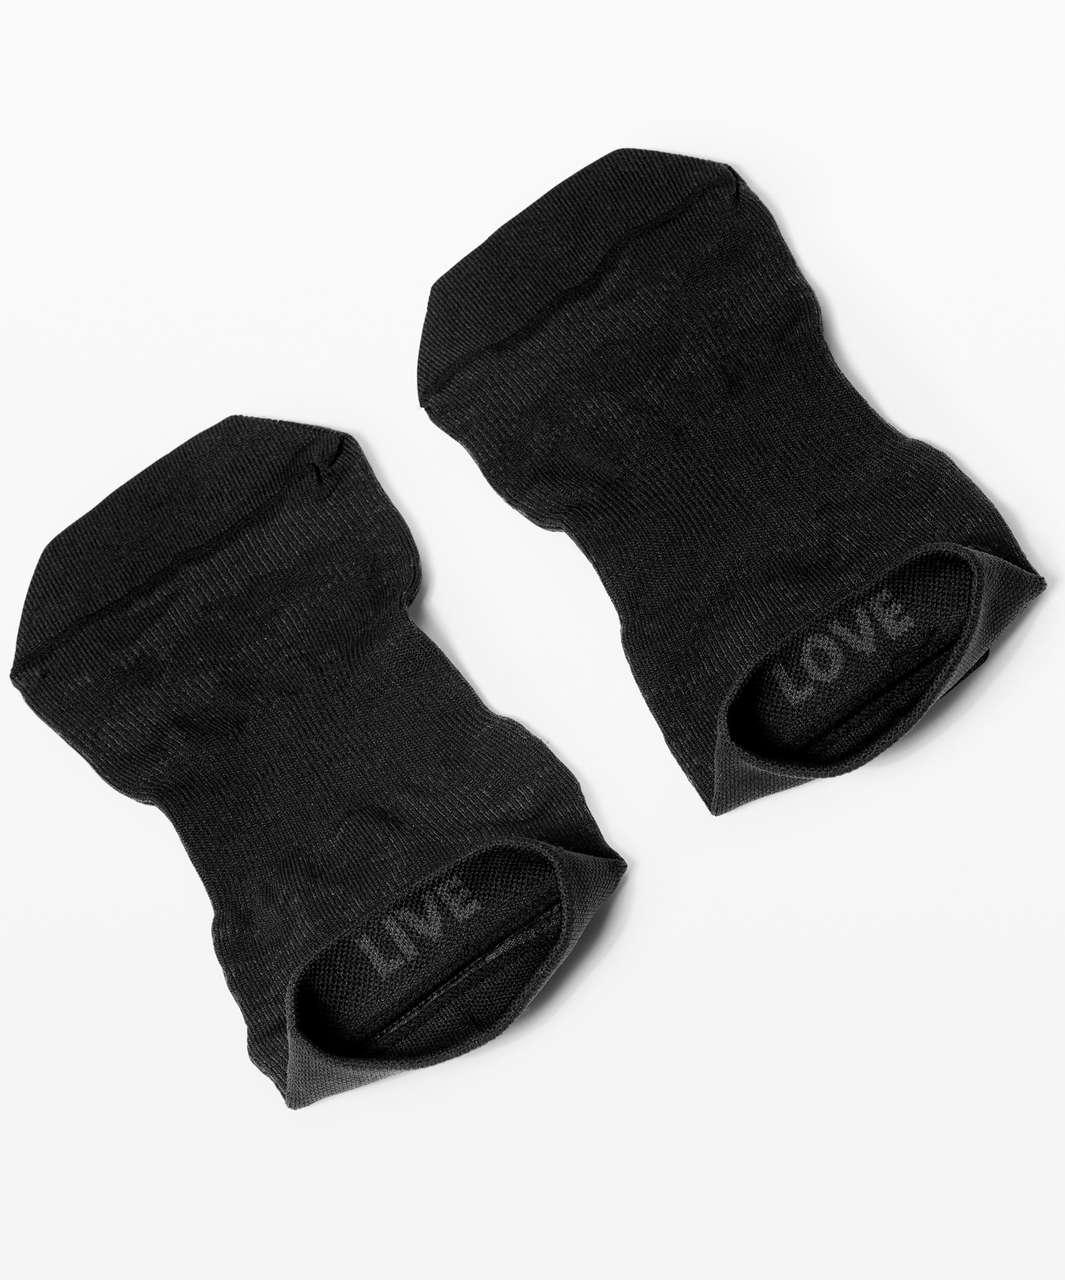 Lululemon Let it Flourish Ankle Sock - Black / Melanite